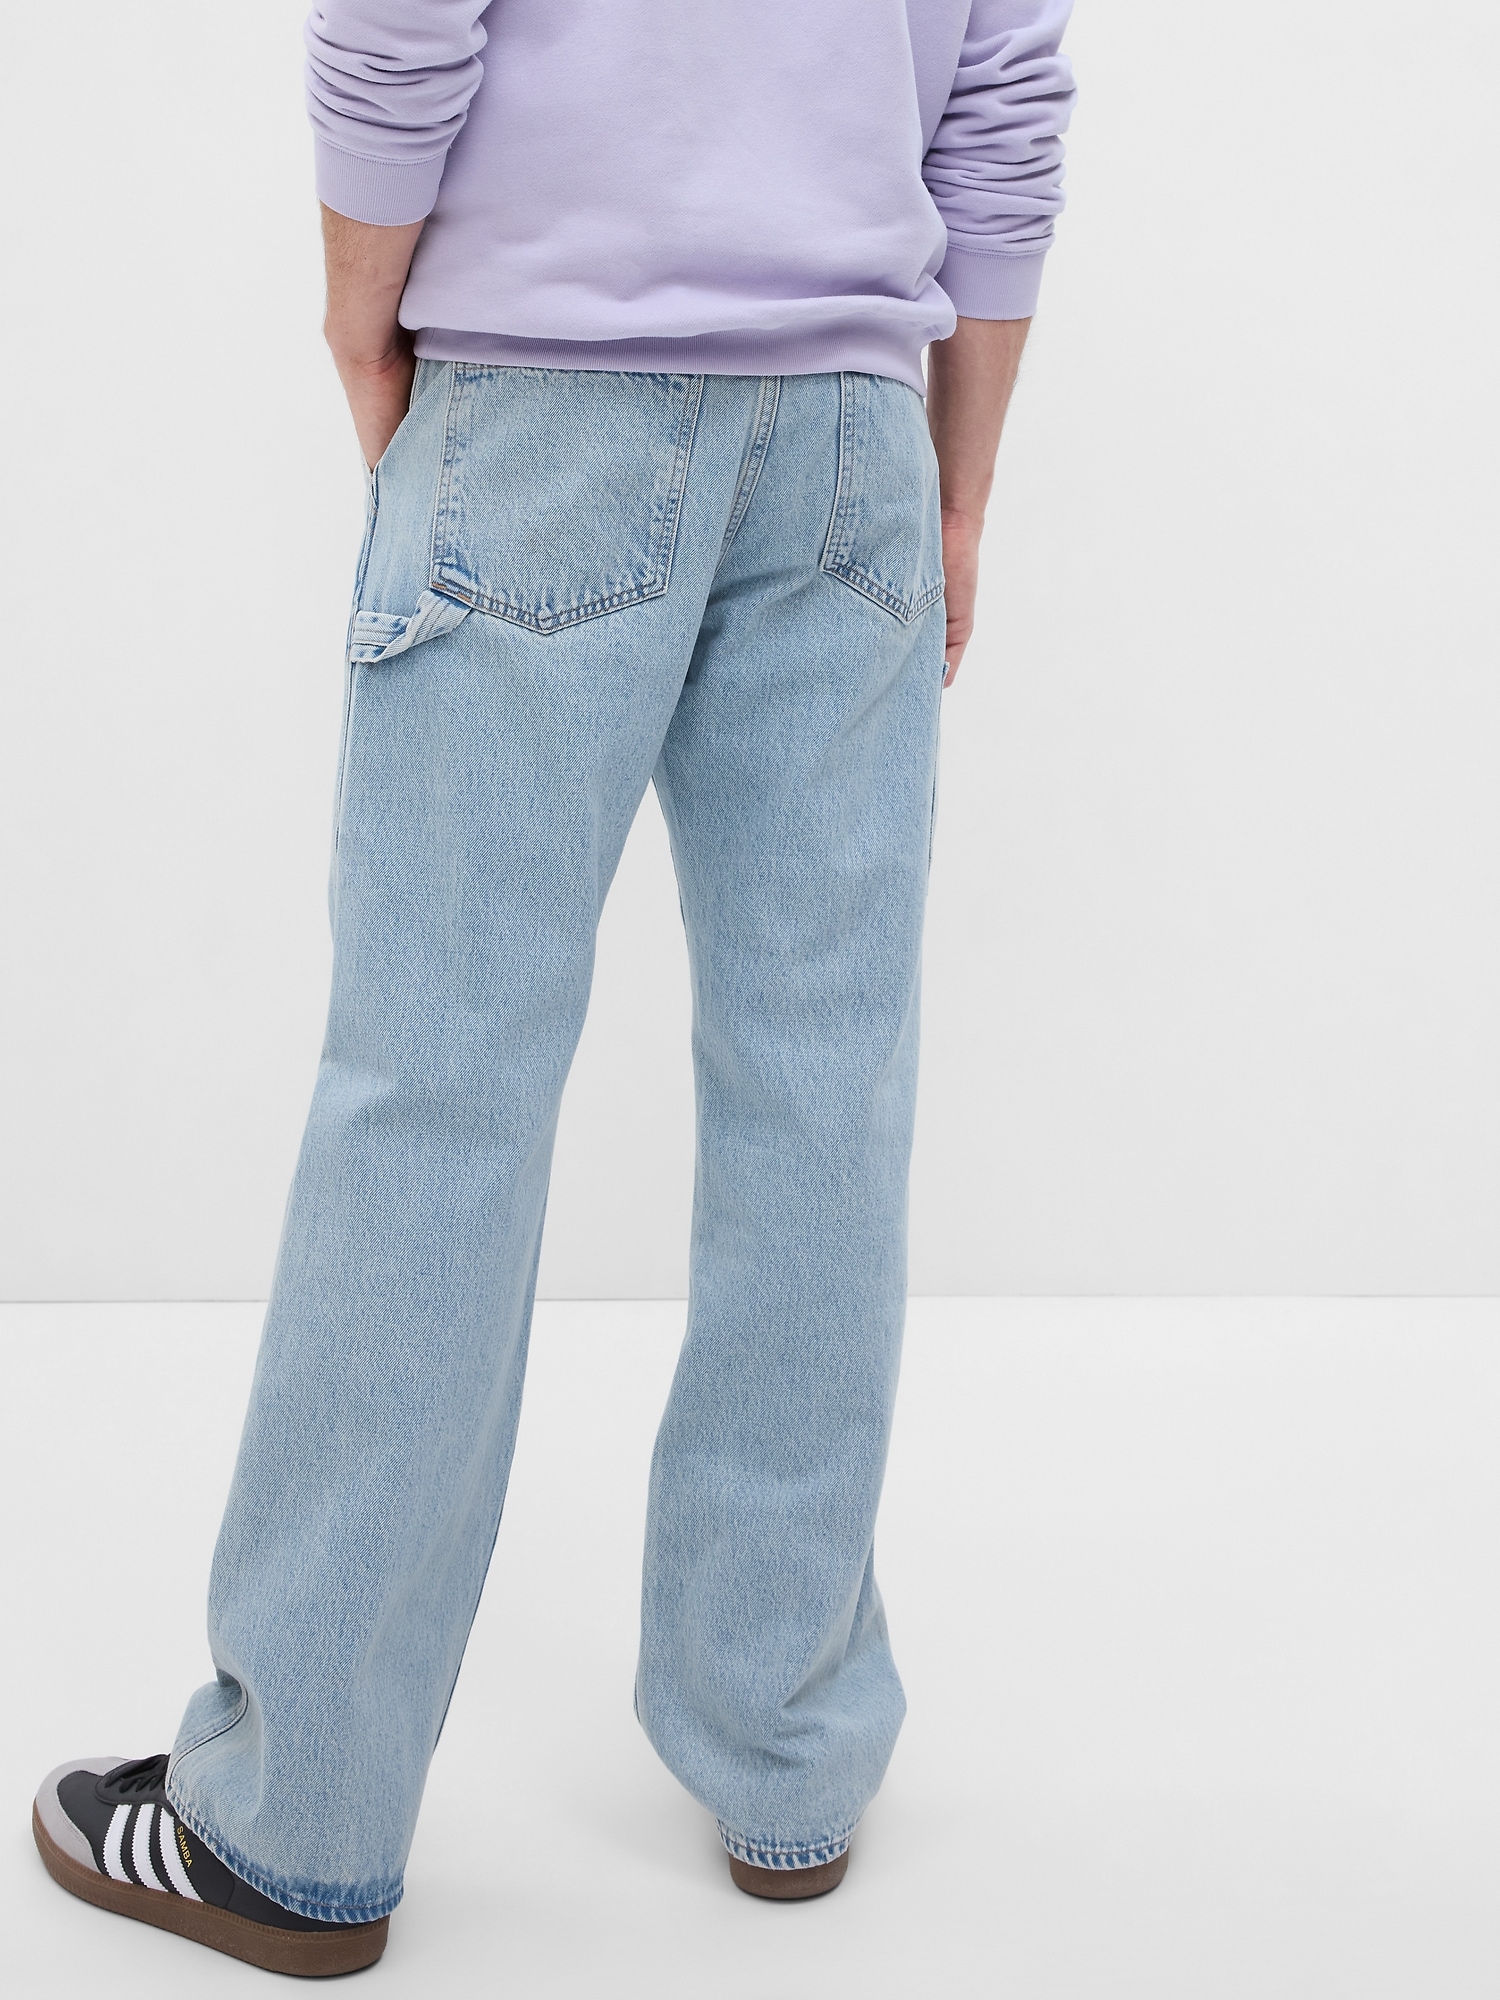 90s Loose Carpenter Jeans | Gap